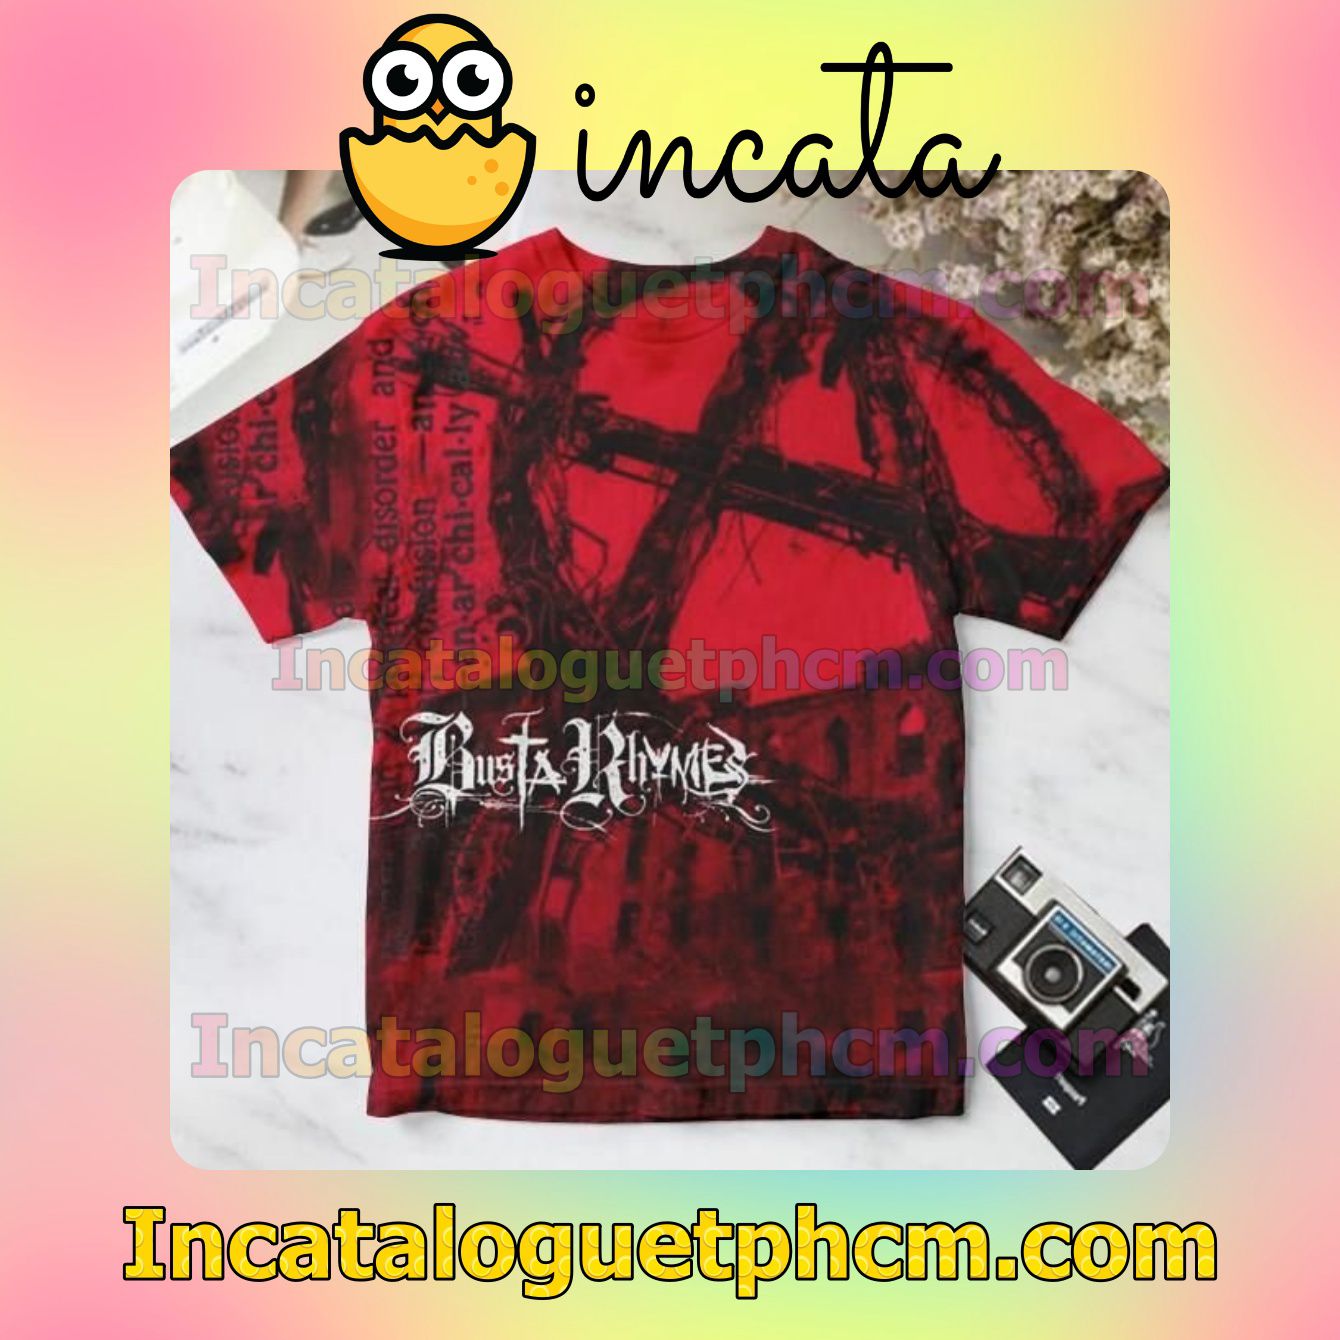 Busta Rhymes Anarchy Album Cover For Fan Shirt